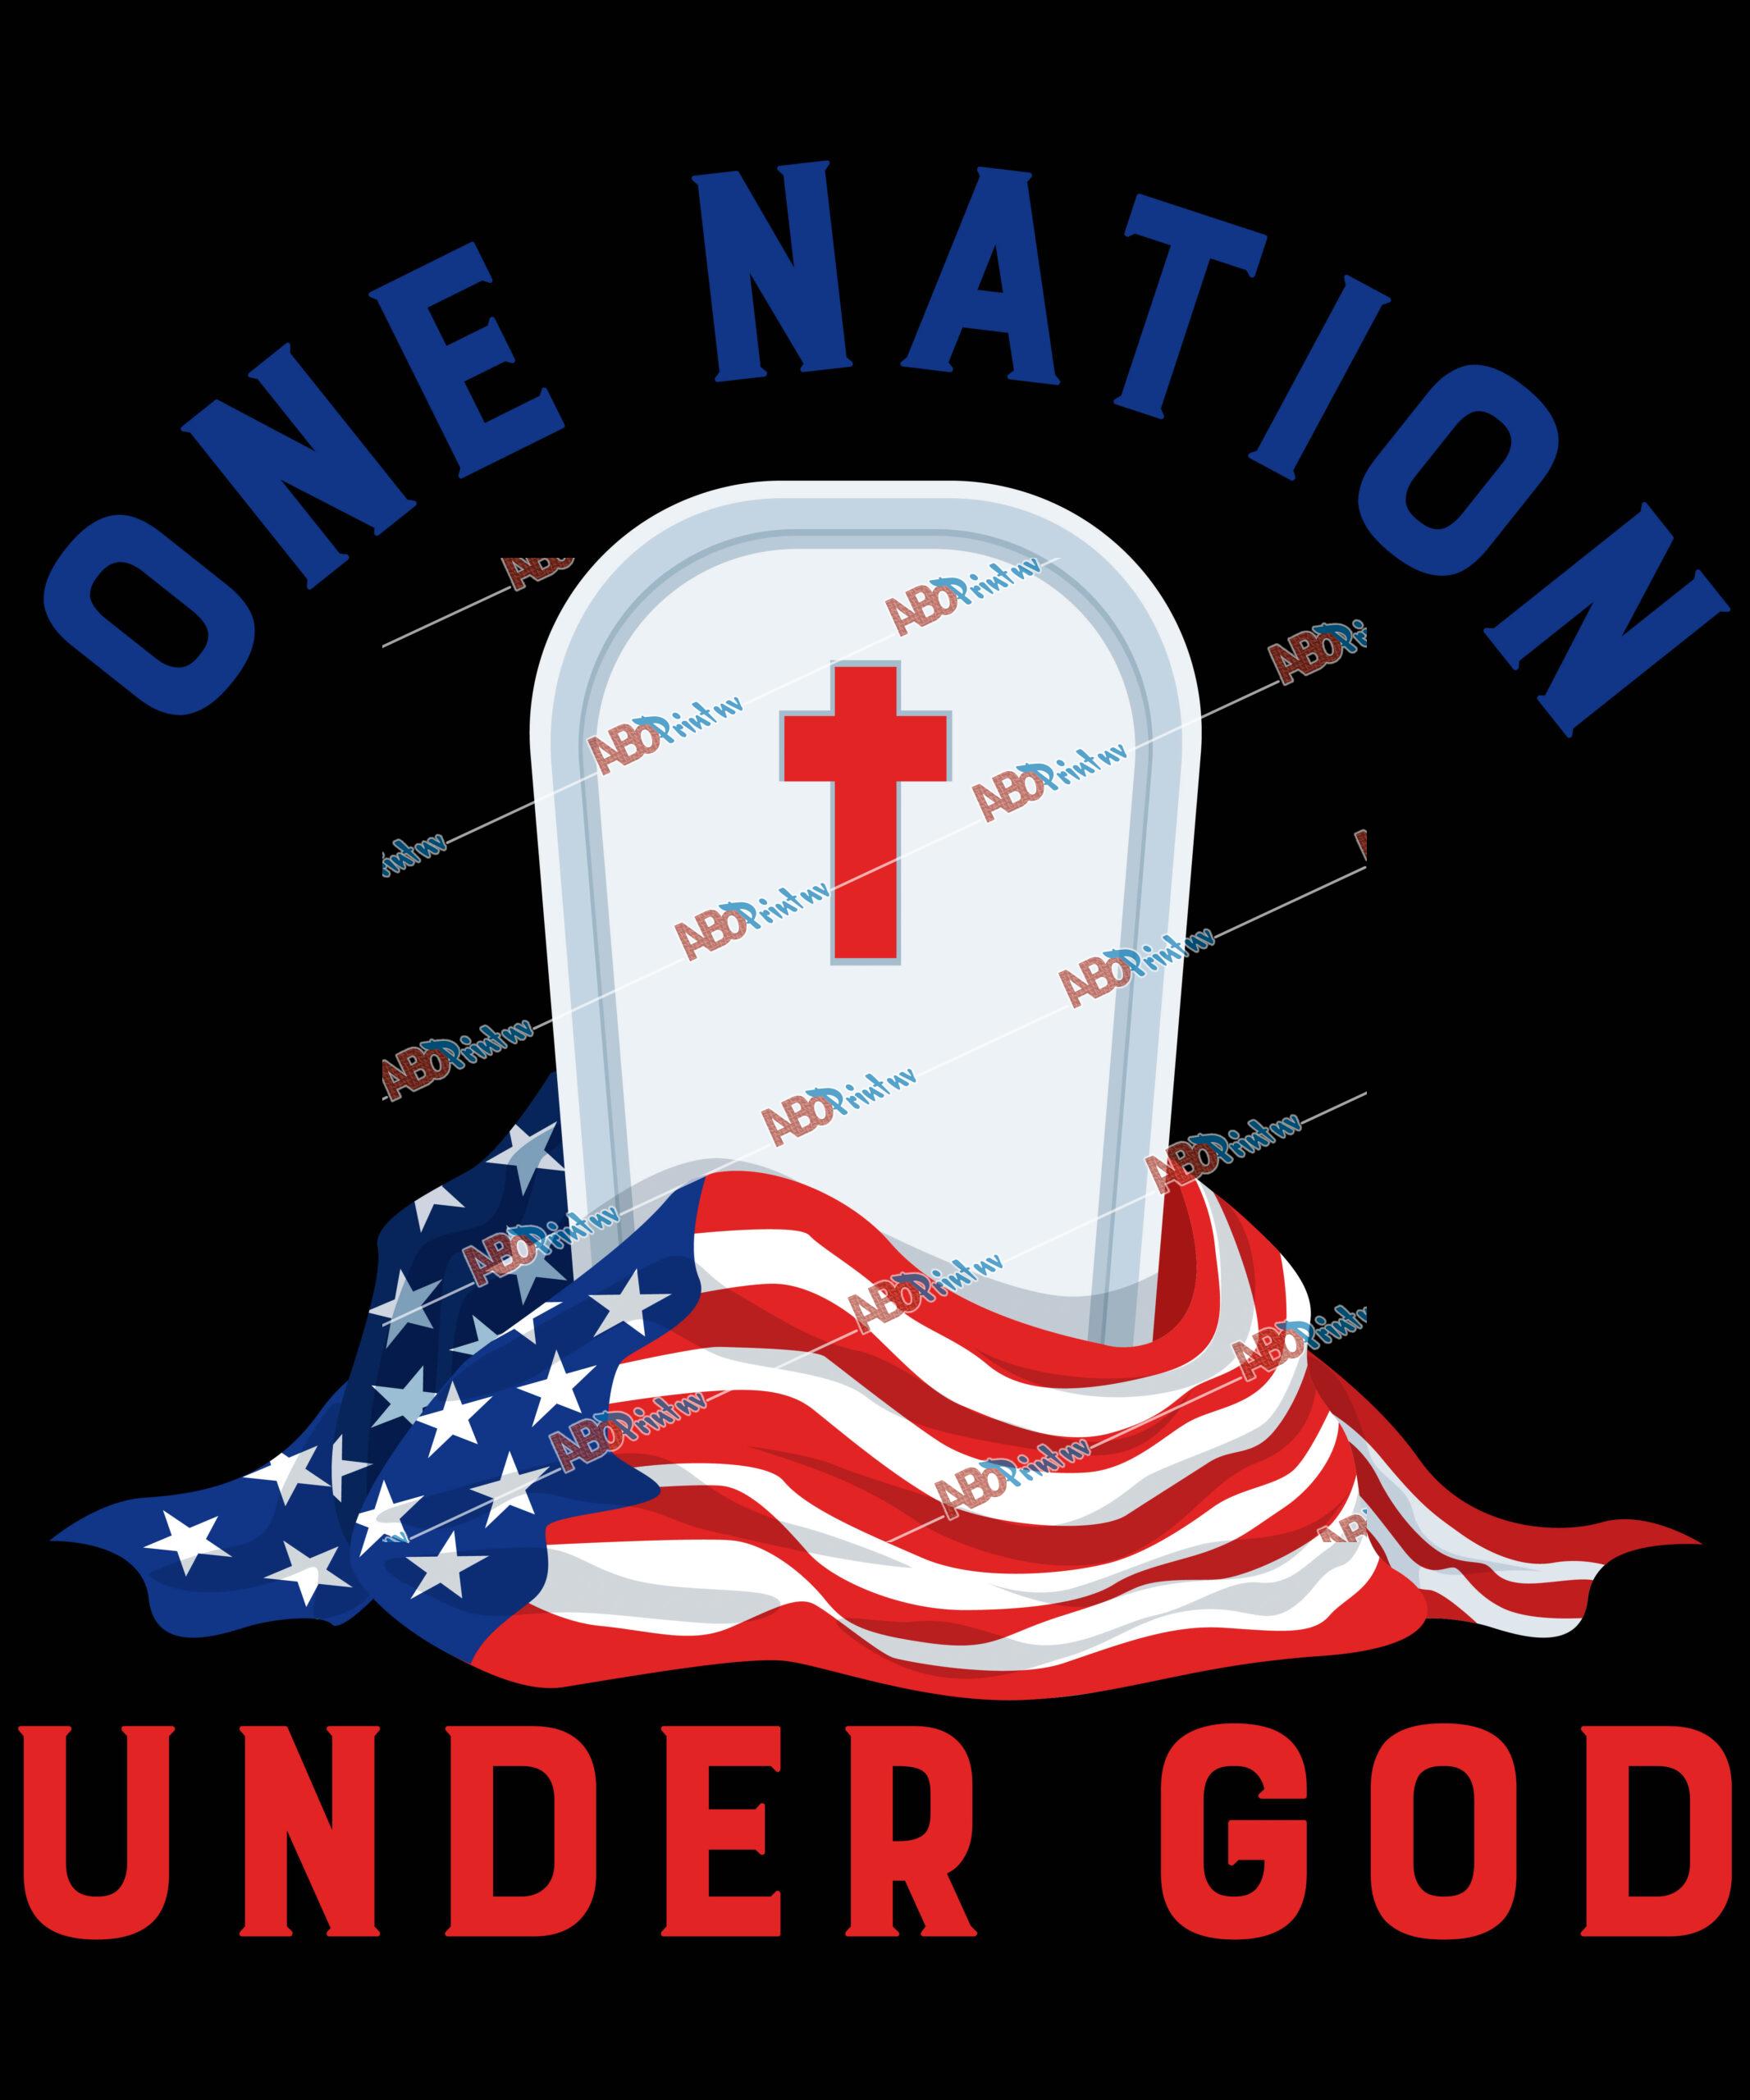 One Nation Under God.jpg